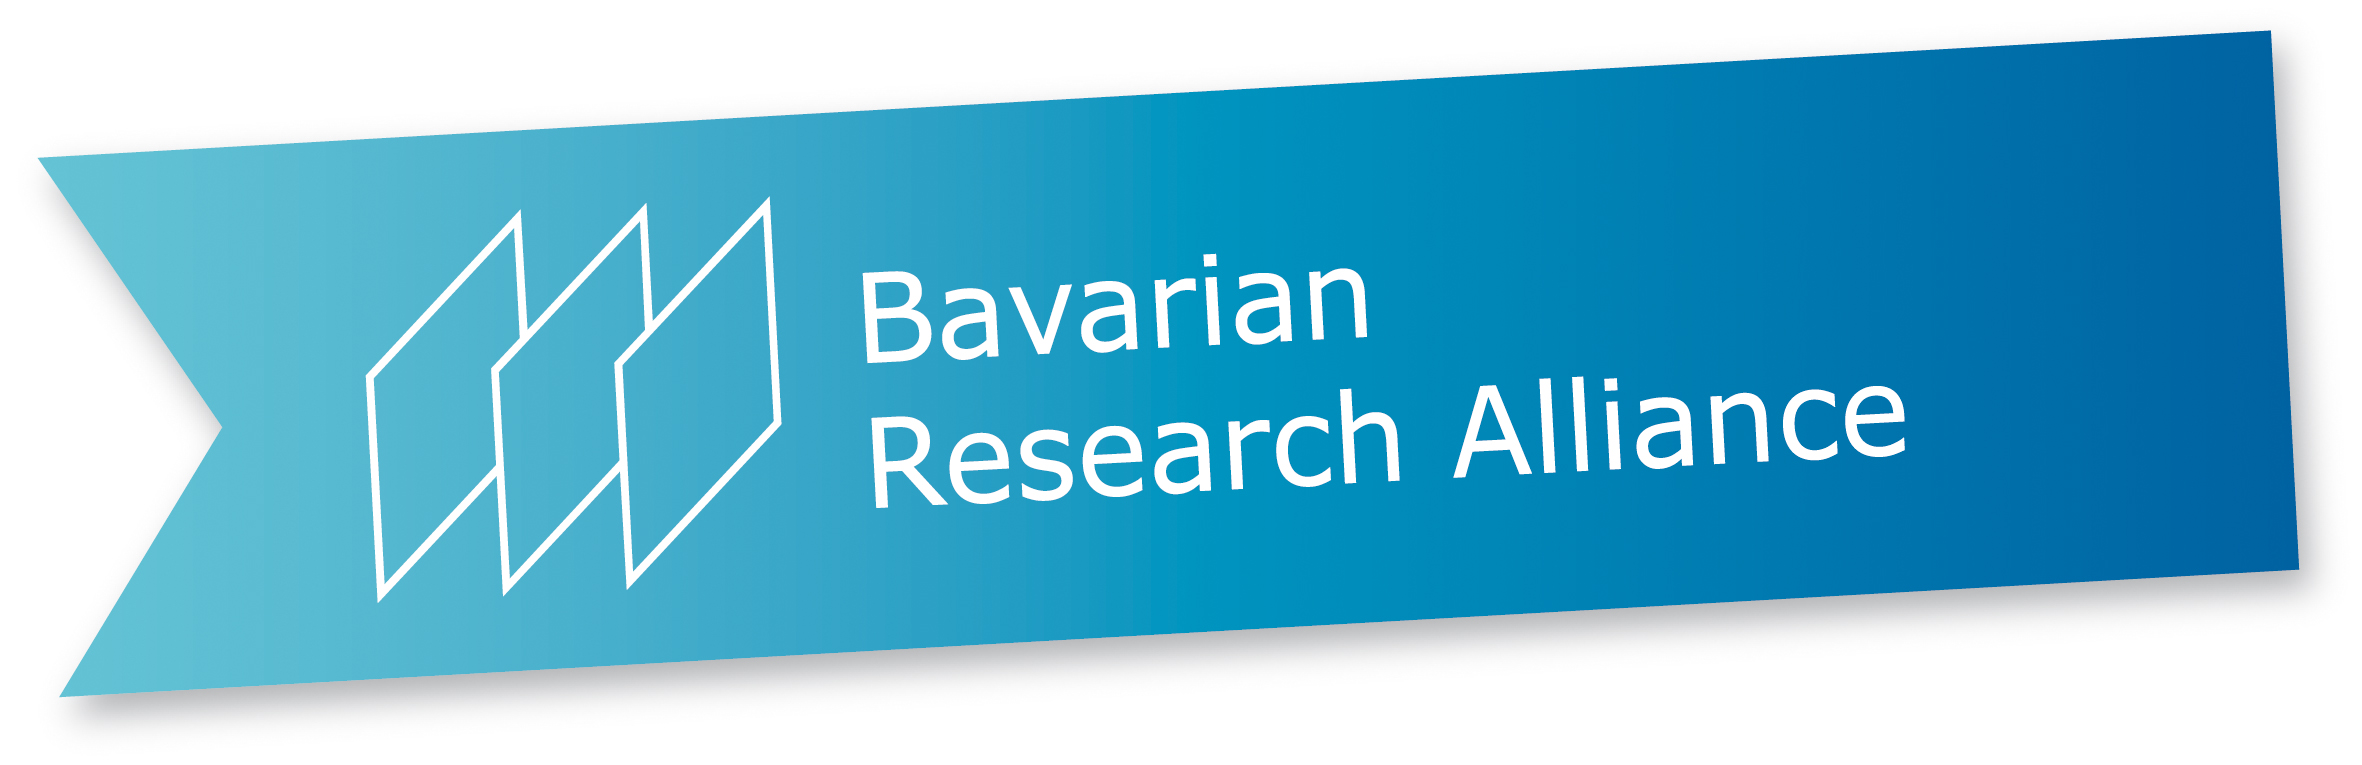 Bayerische Forschungsallianz GmbH (Bavarian Research Alliance)